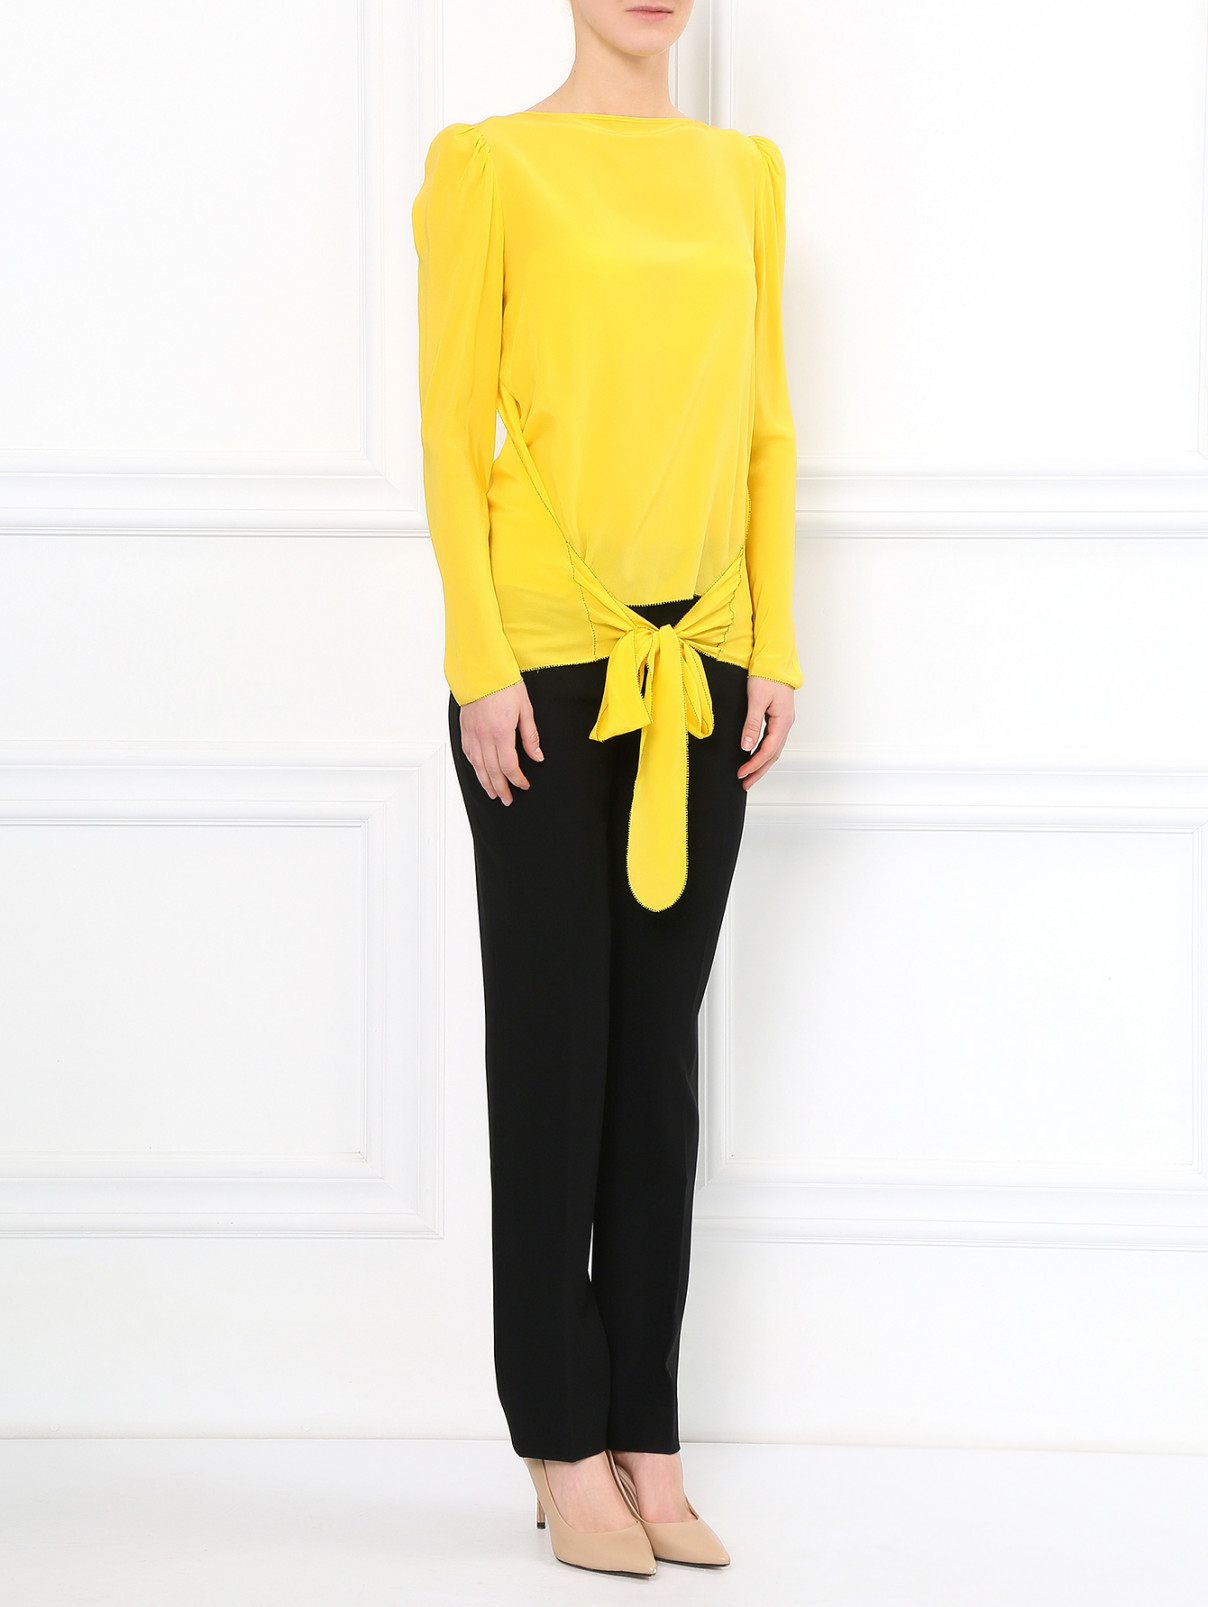 Блуза из шелка с объемнми рукавами See by Chloe  –  Модель Общий вид  – Цвет:  Желтый